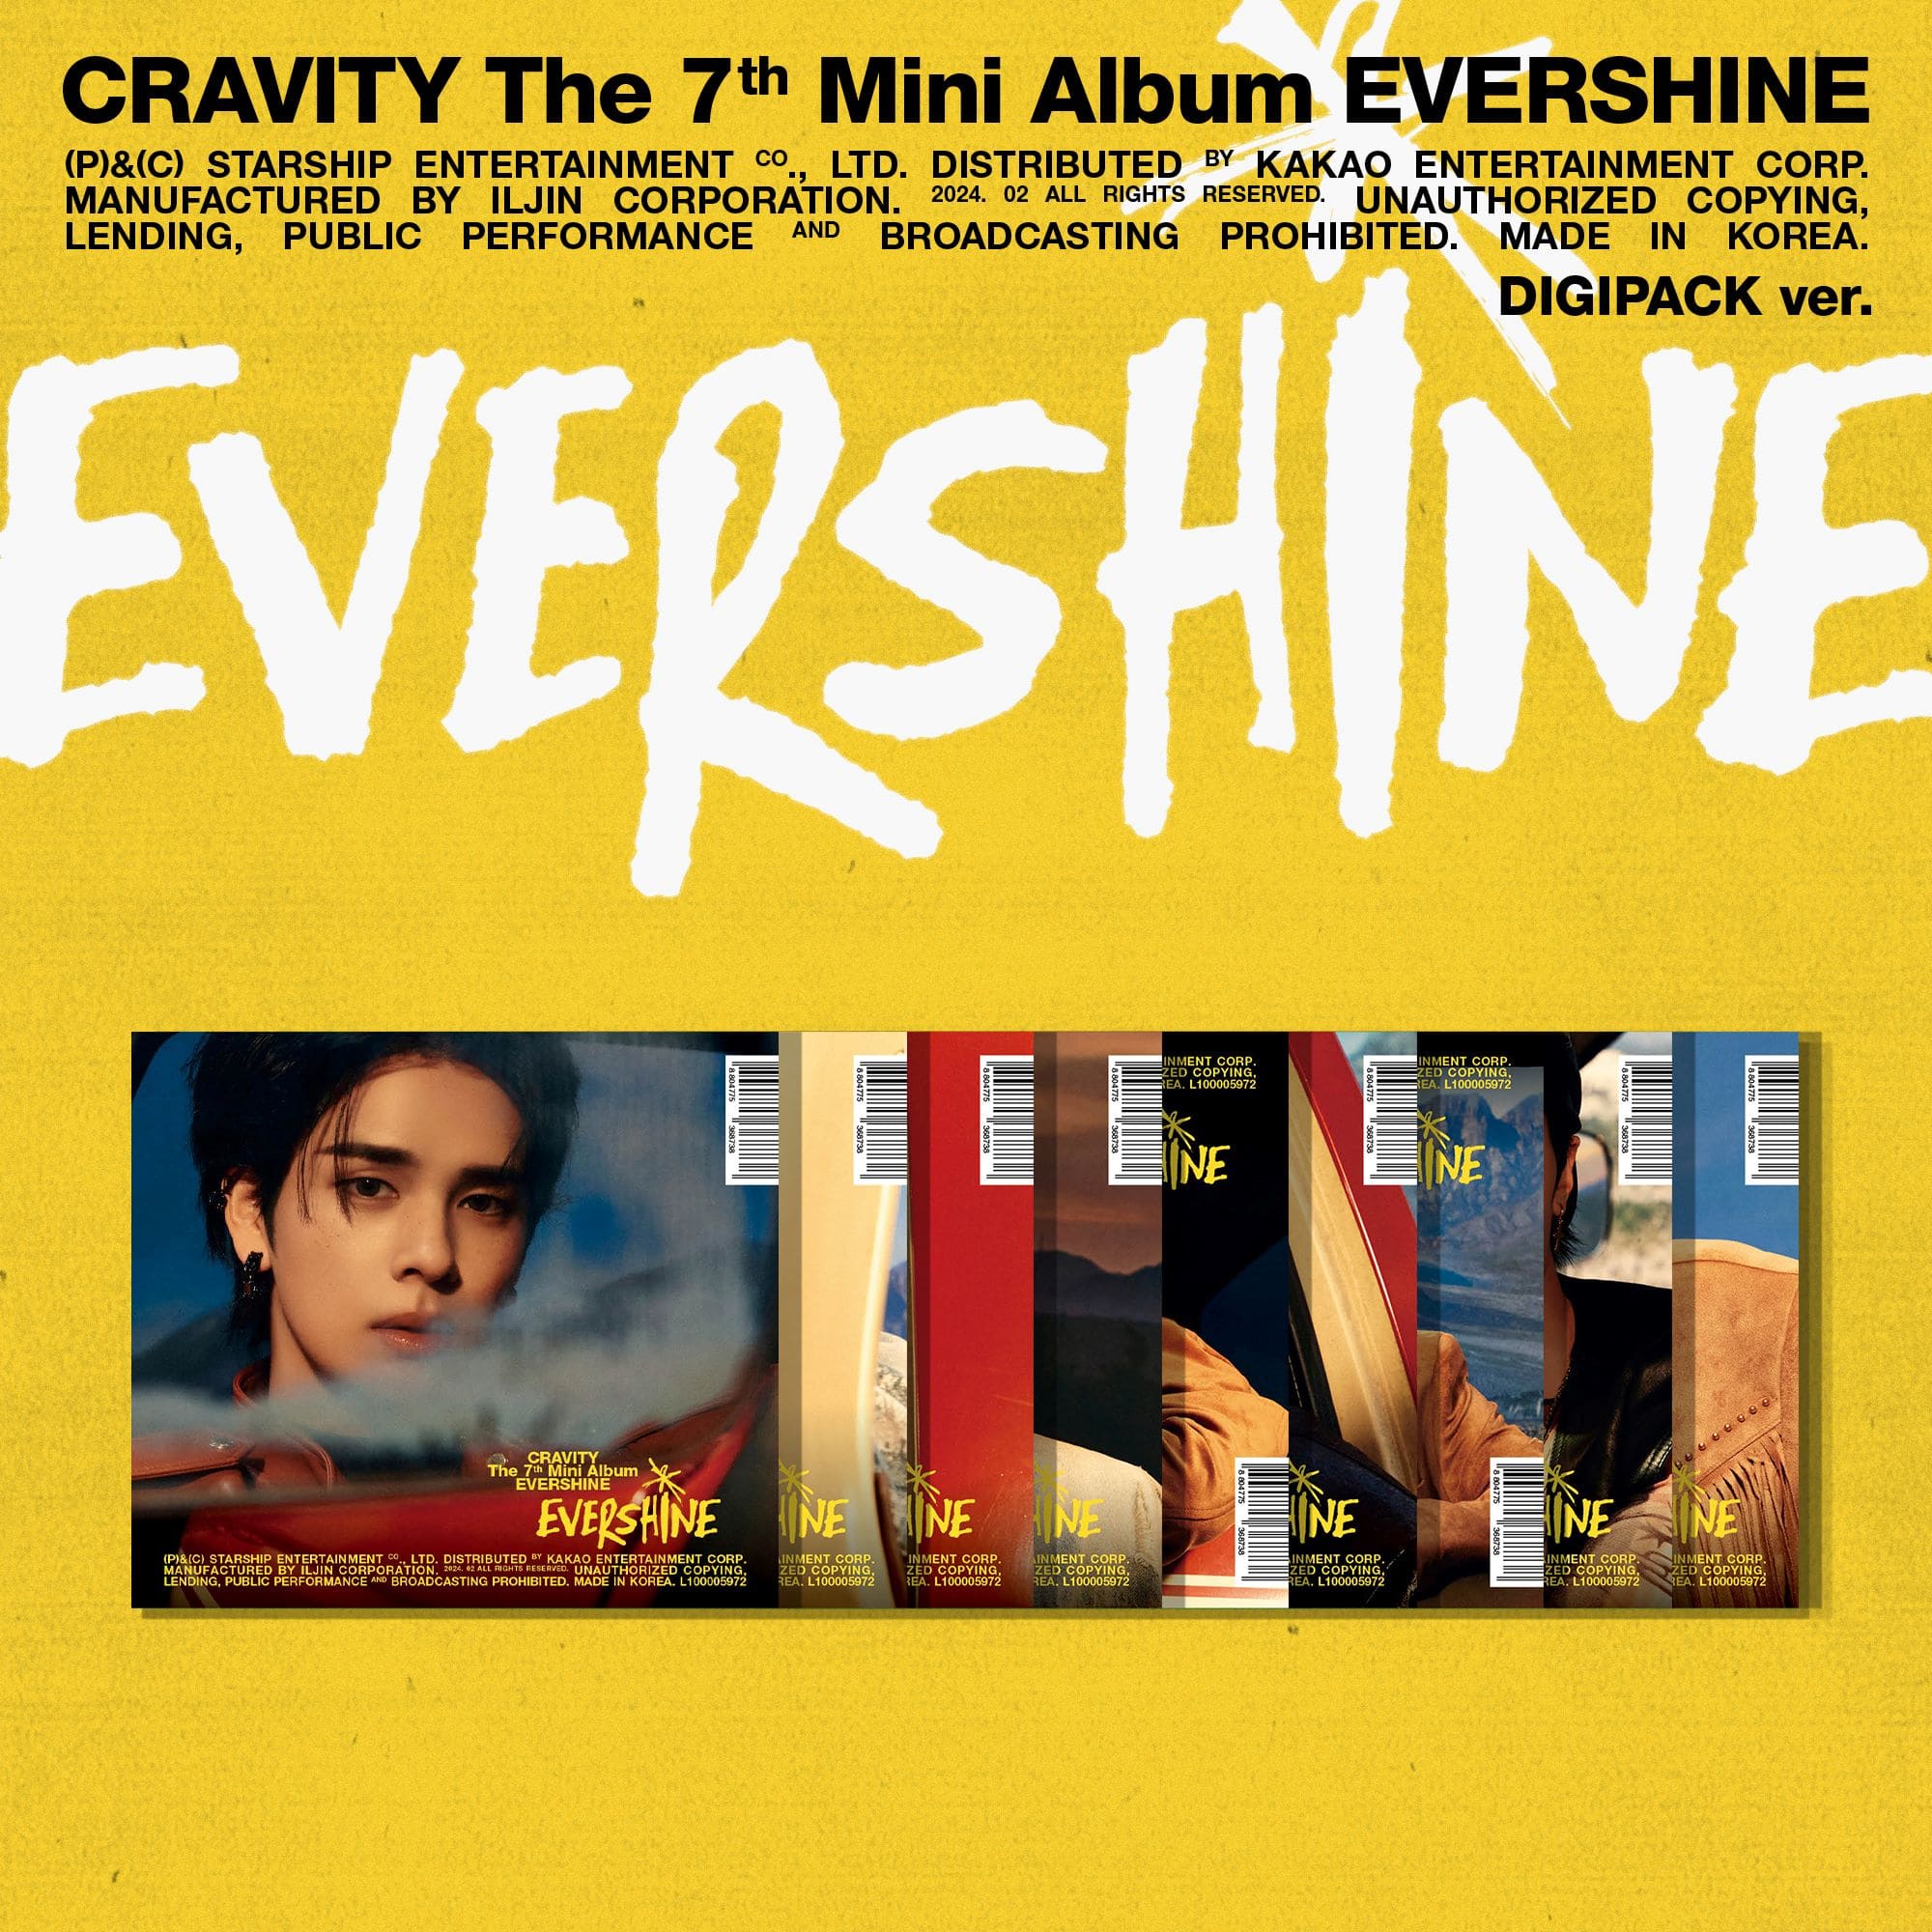 CRAVITY 7th Mini Album EVERSHINE Digipack Version